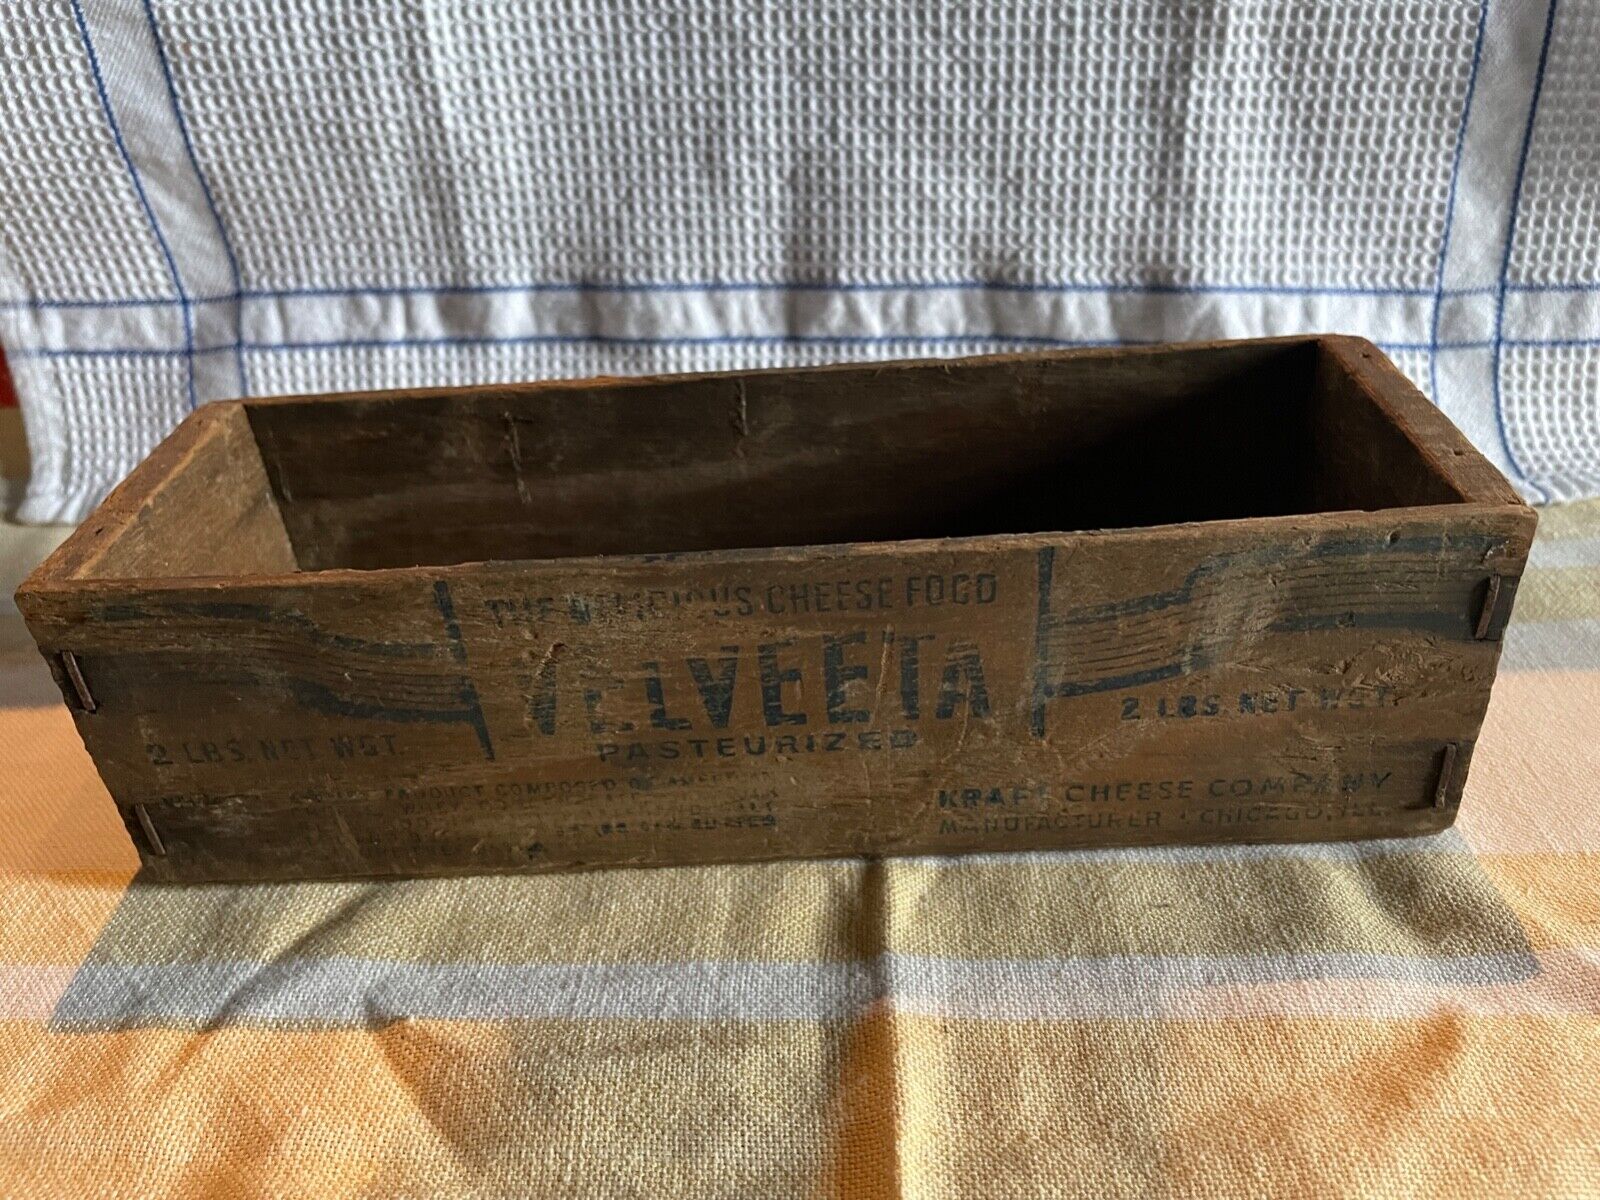 Vintage Velveeta Cheese Kraft Cheese Co 2 lbs Wooden Box Chicago, Ill